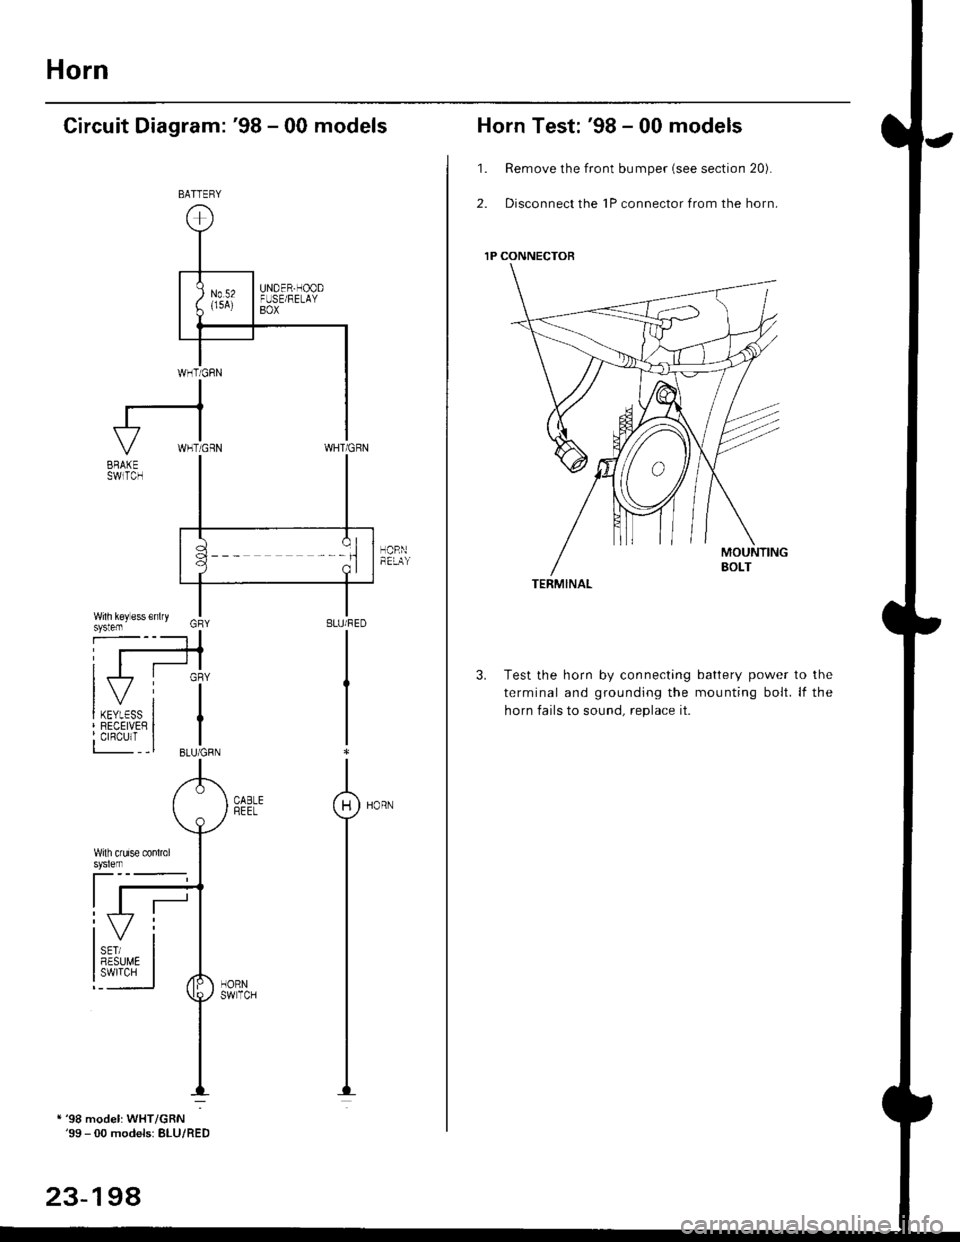 HONDA CIVIC 2000 6.G Workshop Manual Horn
Circuit Diagram: 98 - 00 models
HCRI]tEtAa
BATTEFY
1 98 model: WHT/GRN99 - 00 modelsr BLU/RED
23494
Horn Test: 98 - 00 models
1. Remove the f.ont bumper (see section 20).
2. Disconnect the 